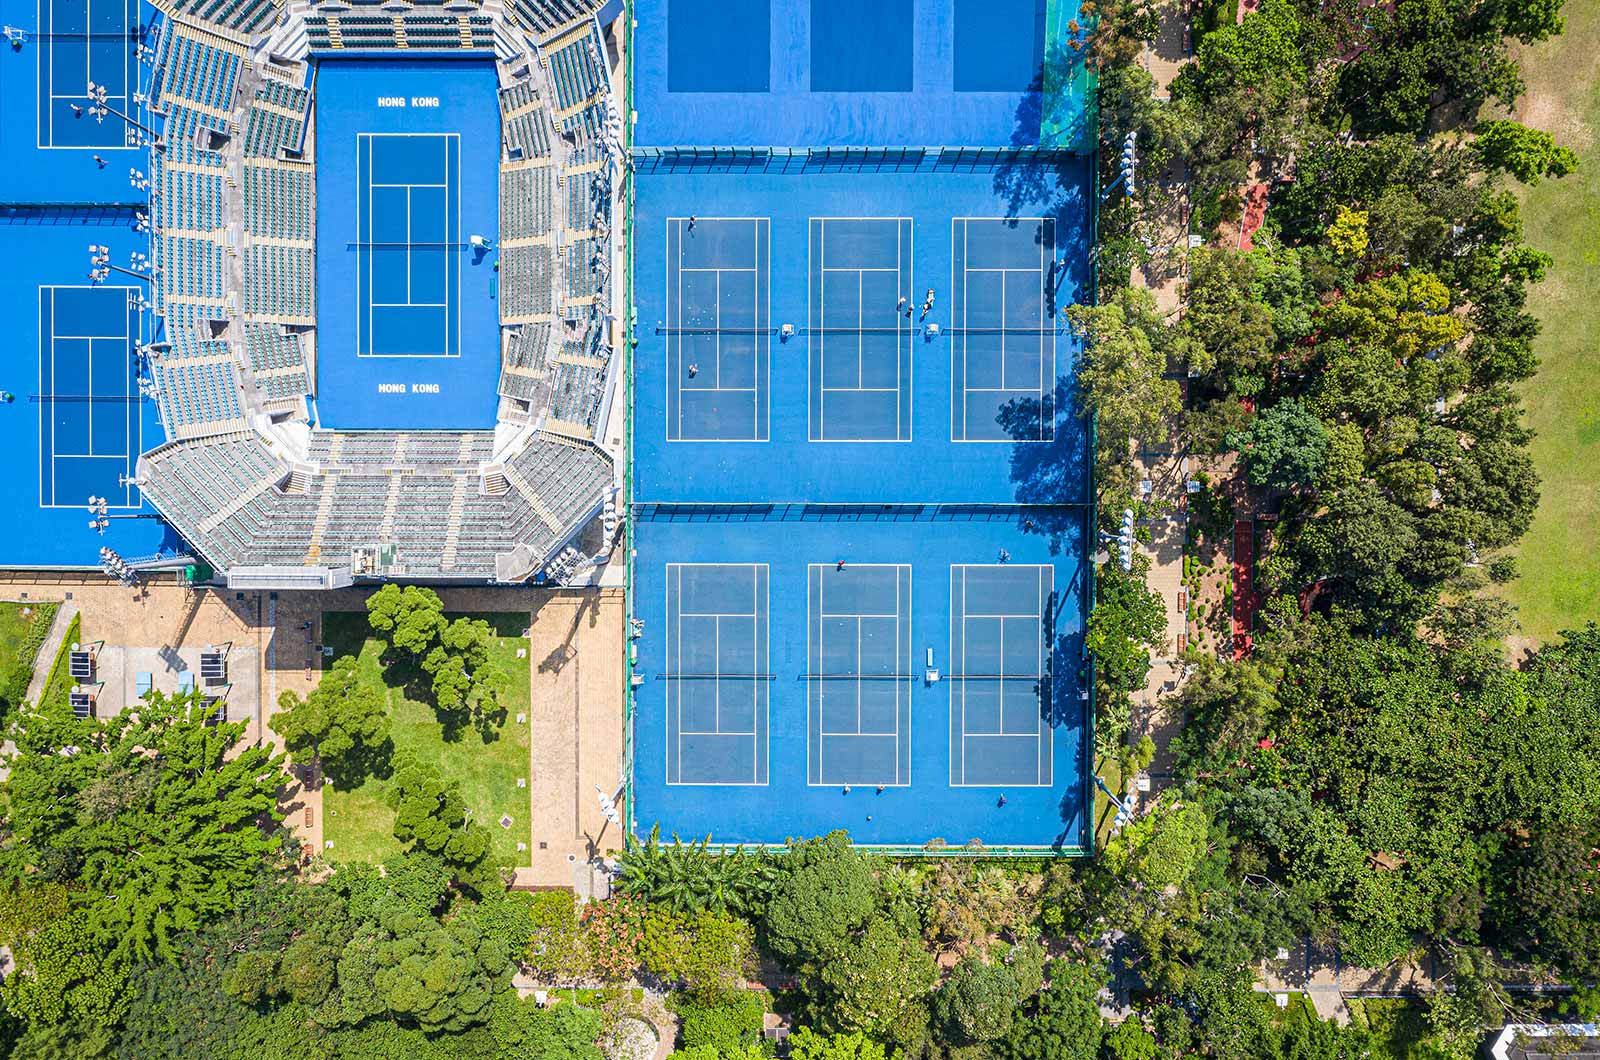 Tennis Urban Parks Victoria Park